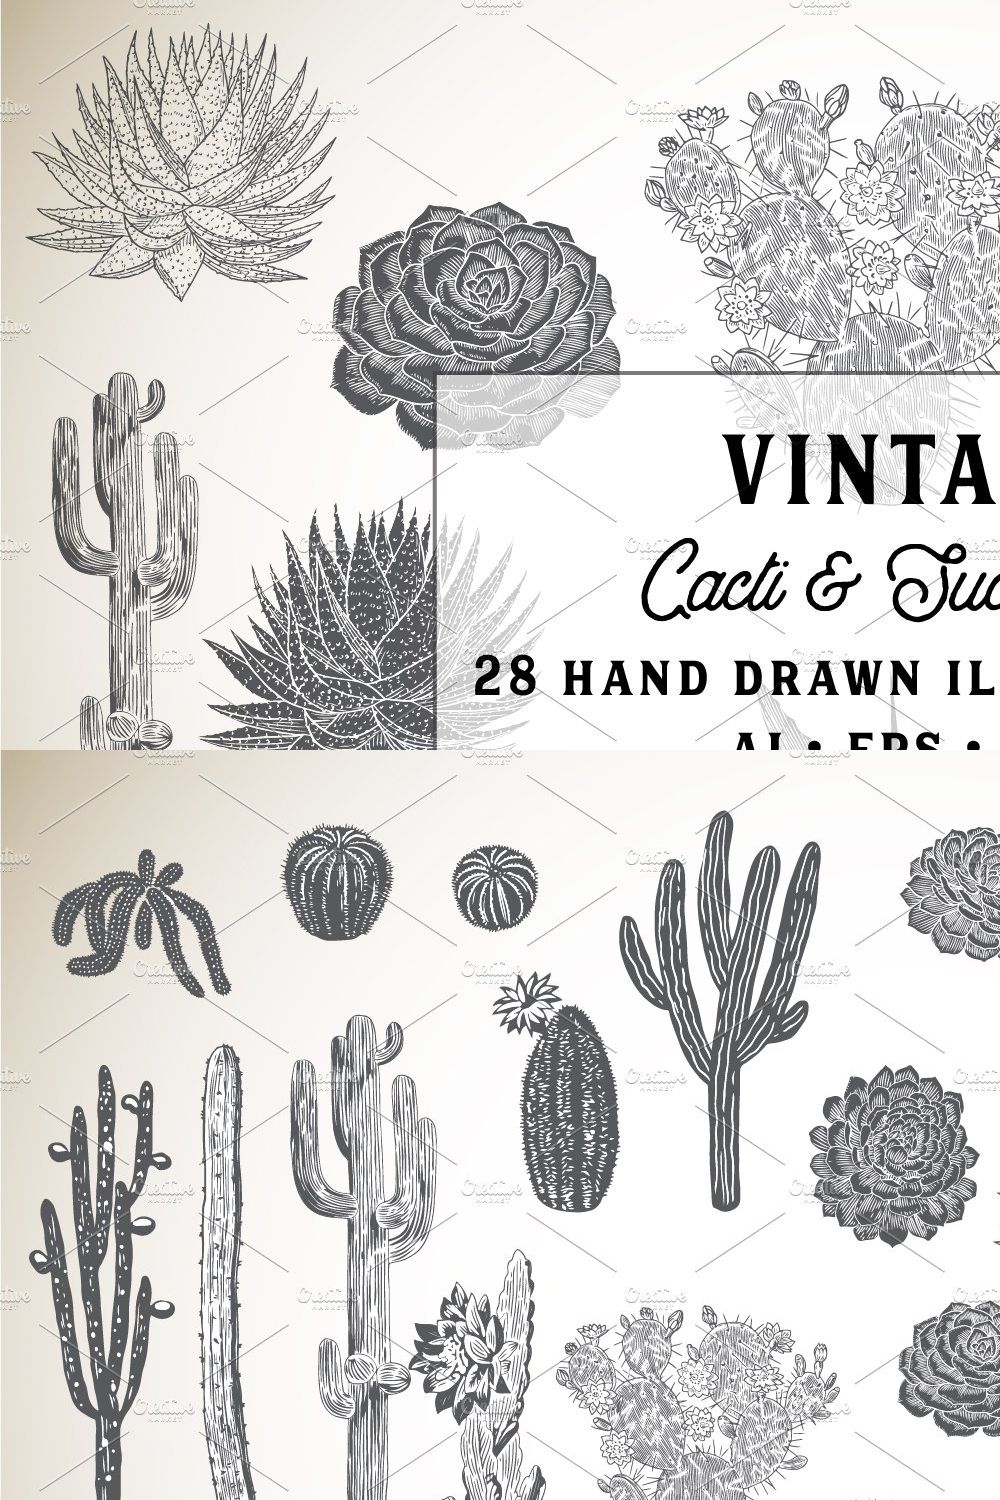 Hand Drawn Succulents & Cacti Set pinterest preview image.